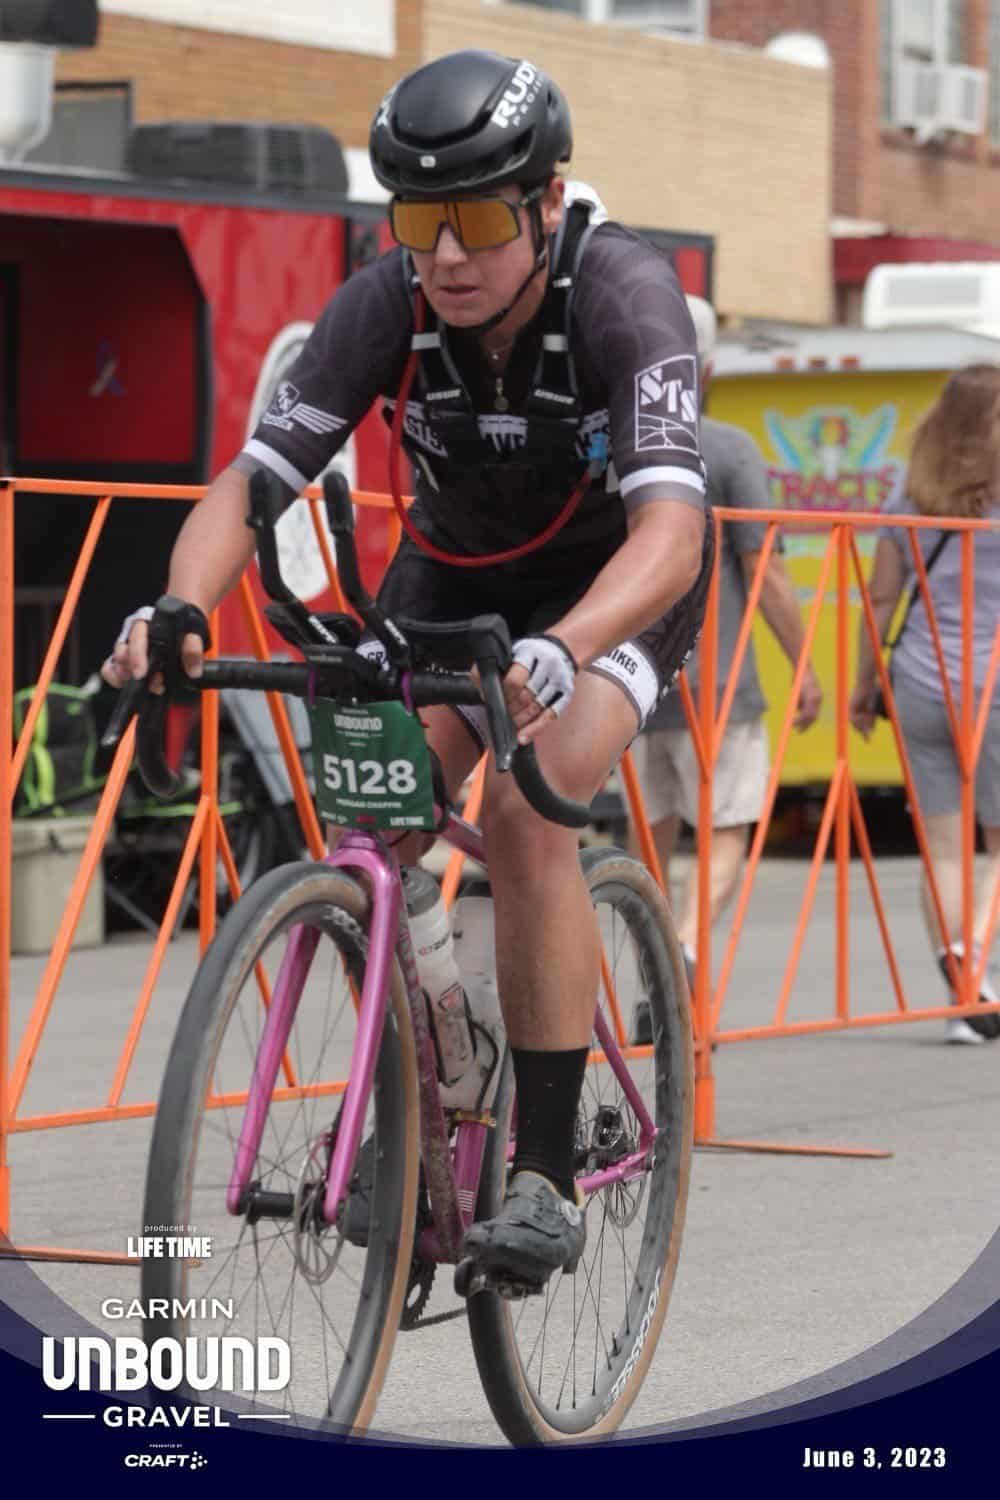 A white woman on a purple bike at race. She is wearing a black cycling kit.